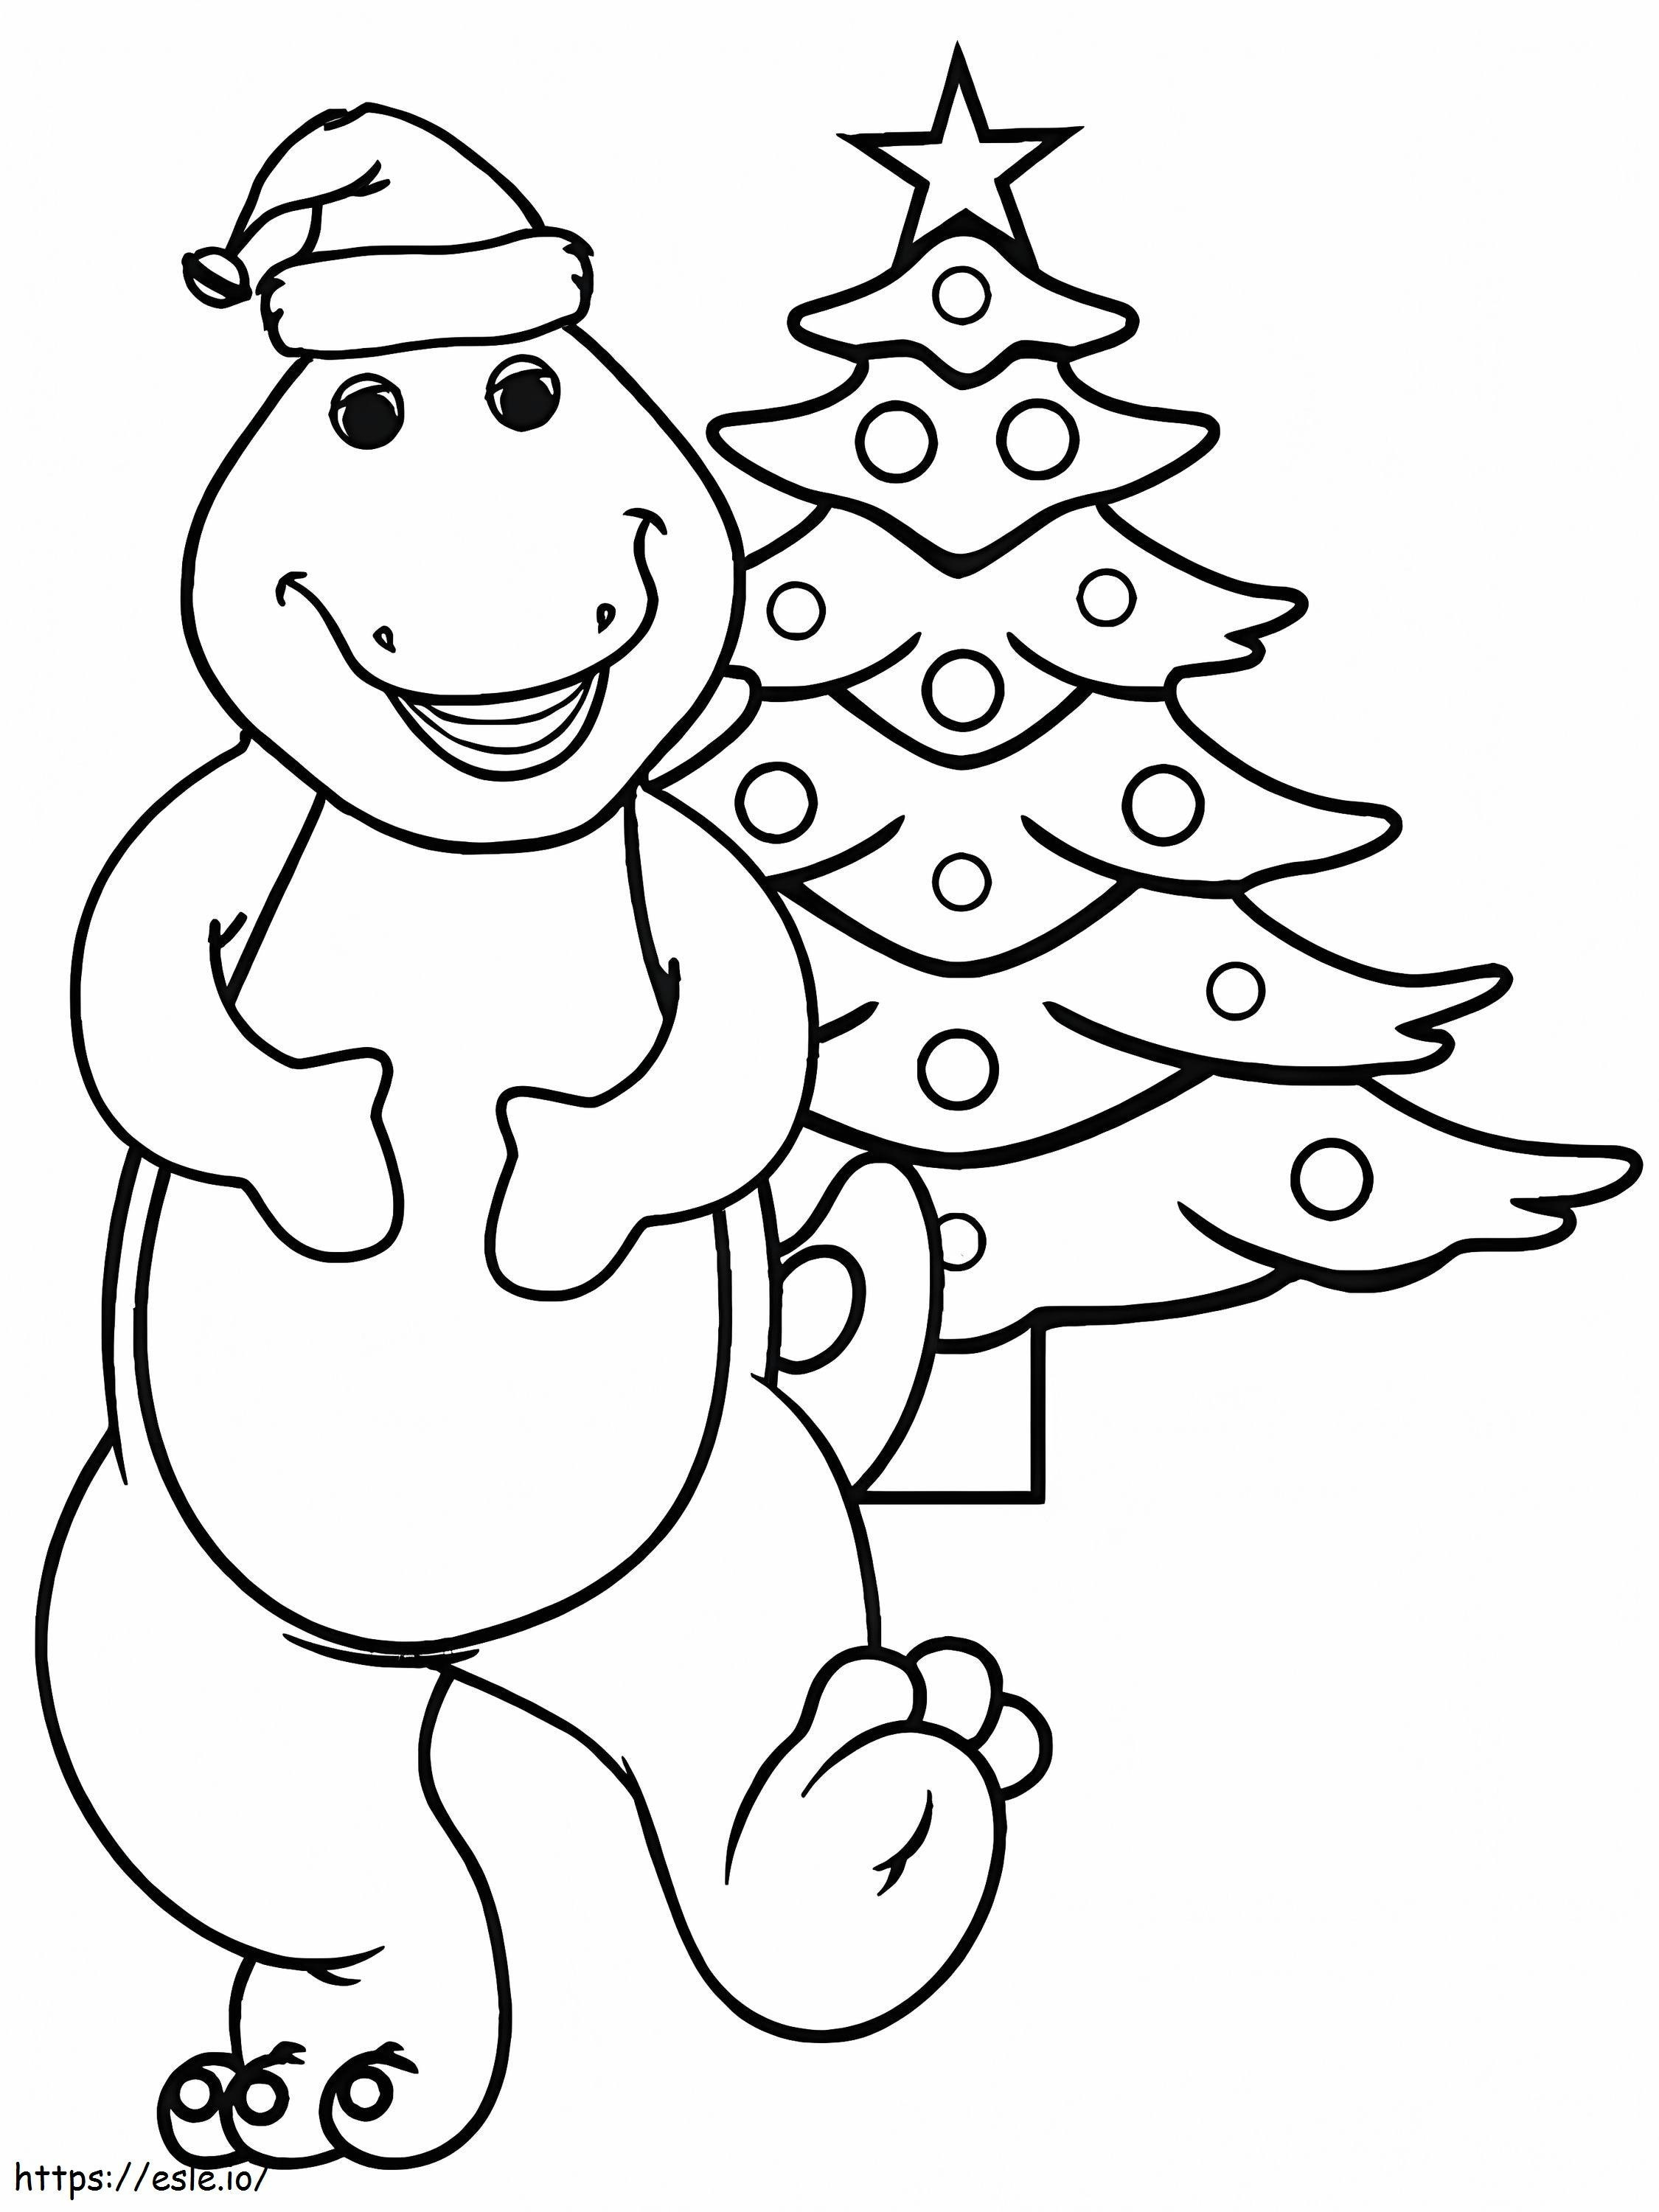 Coloriage Dinosaure de dessin animé avec arbre de Noël à imprimer dessin